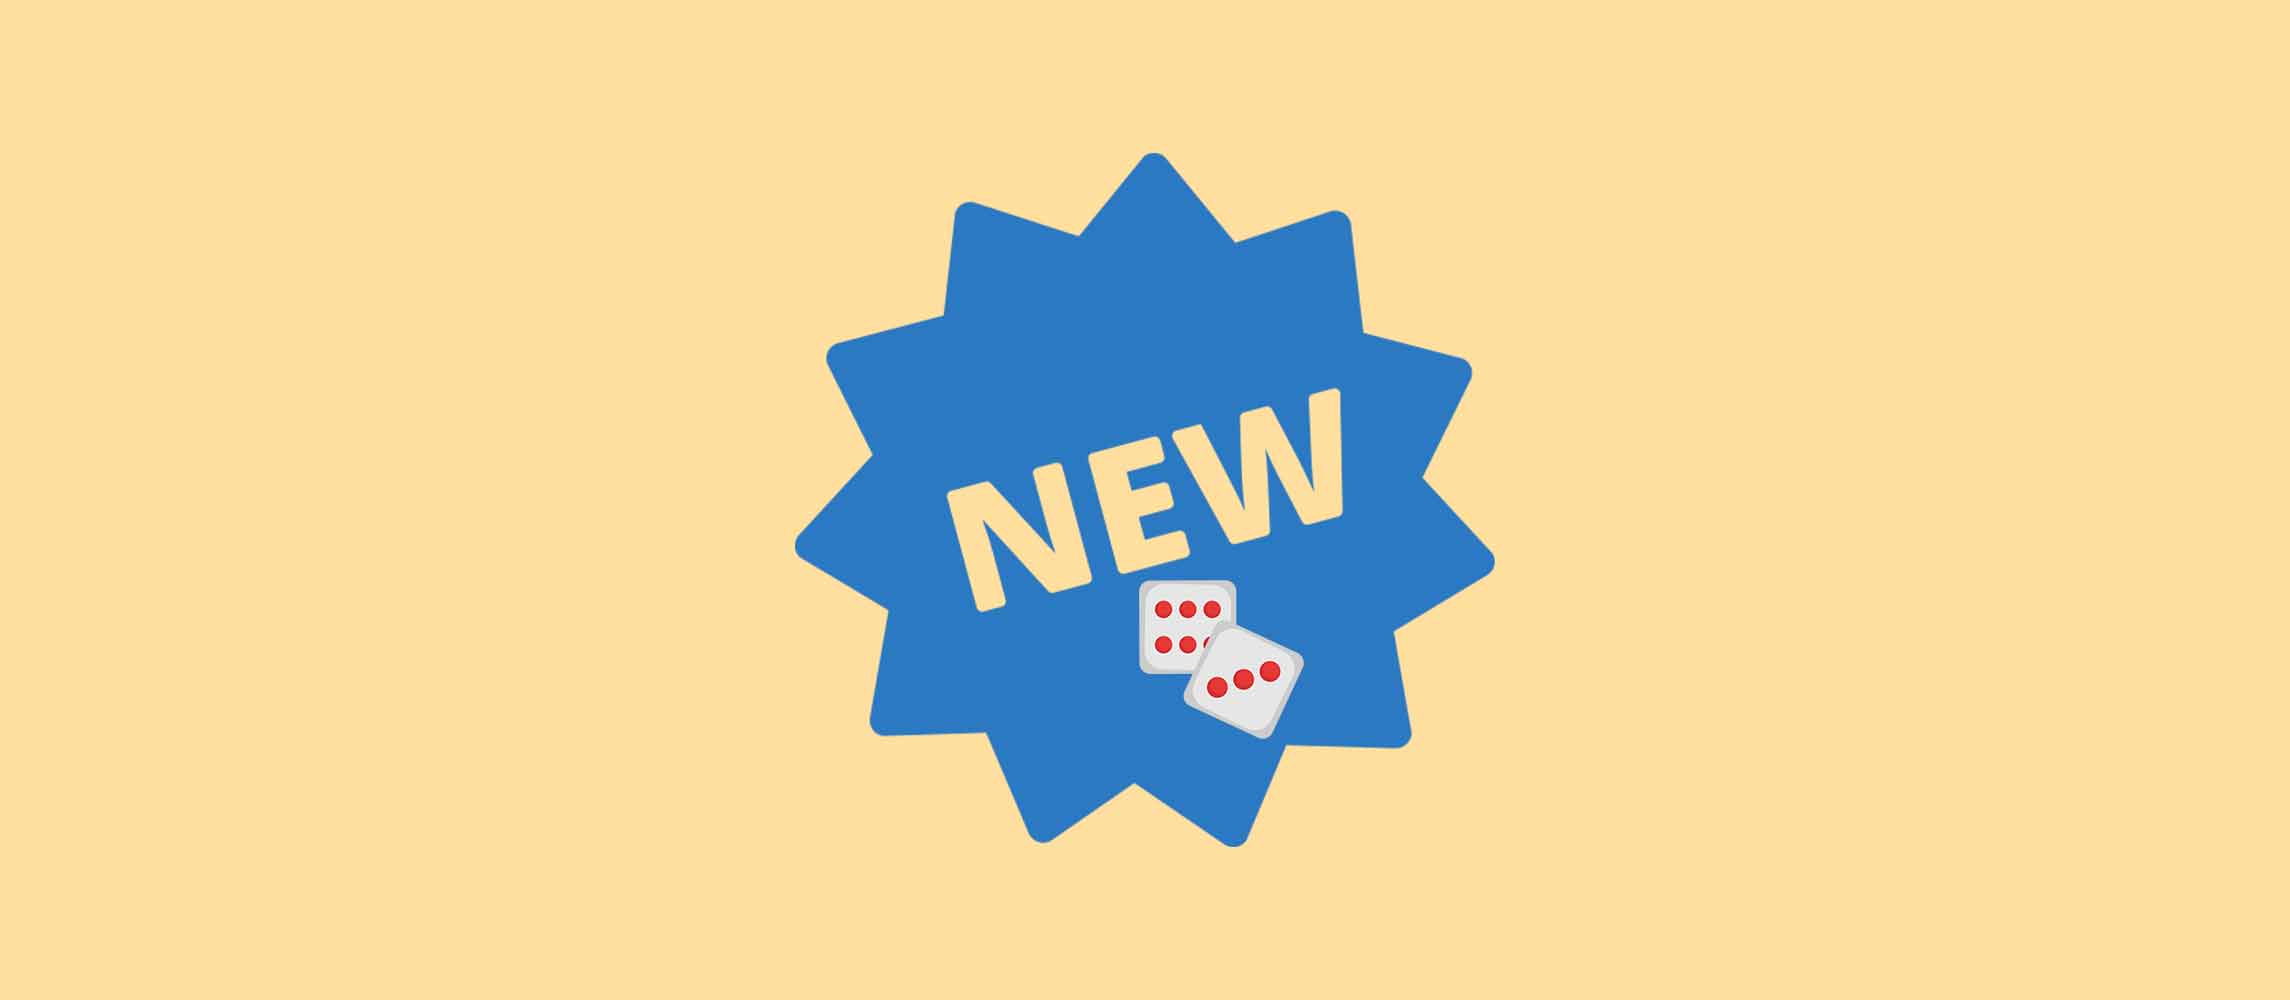 Jalla Casino - new Pay N Play Casino